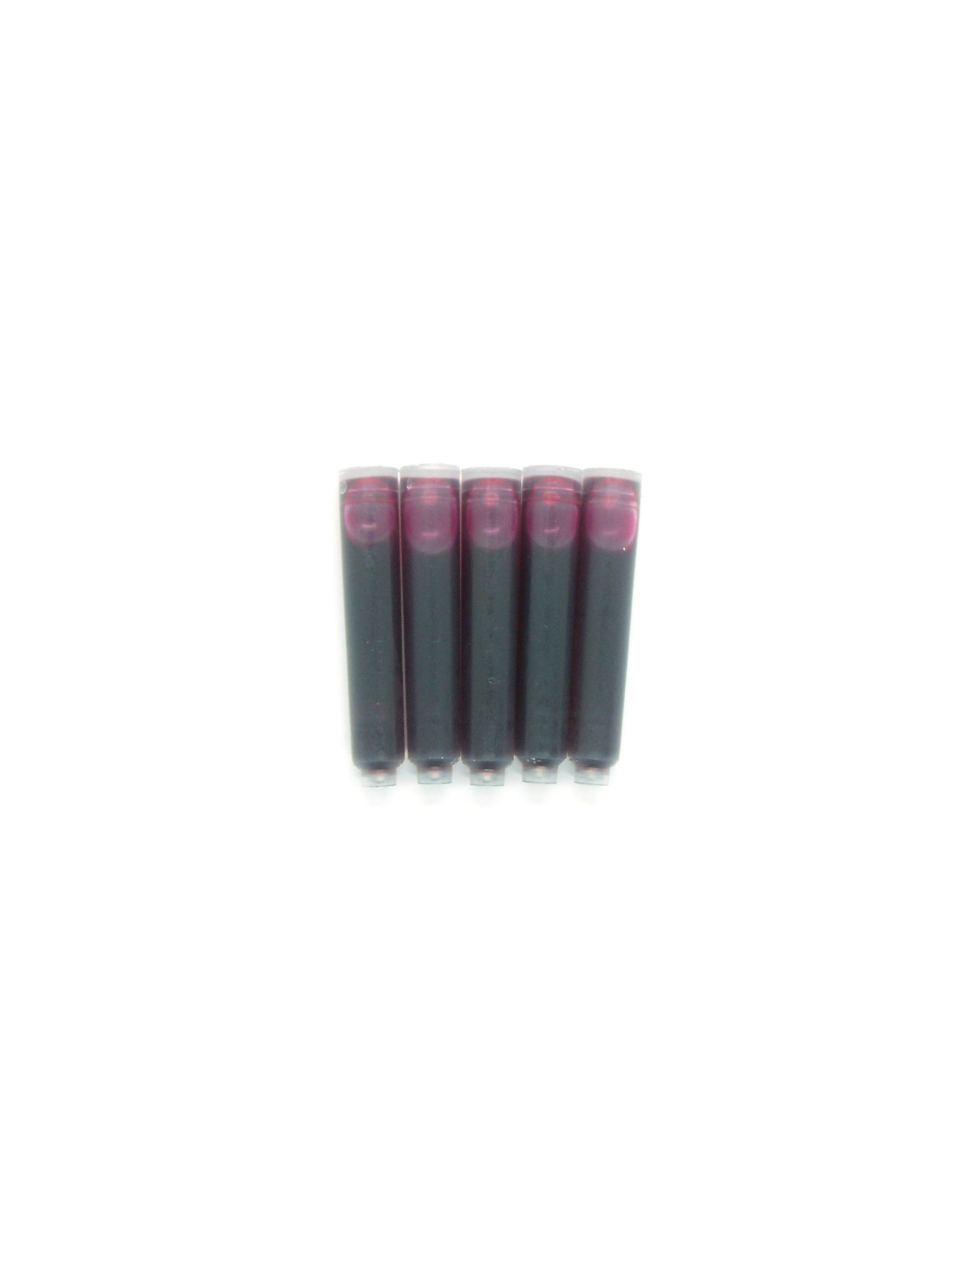 PenConverter Ink Cartridges For ACME Studio Fountain Pens (Pink)